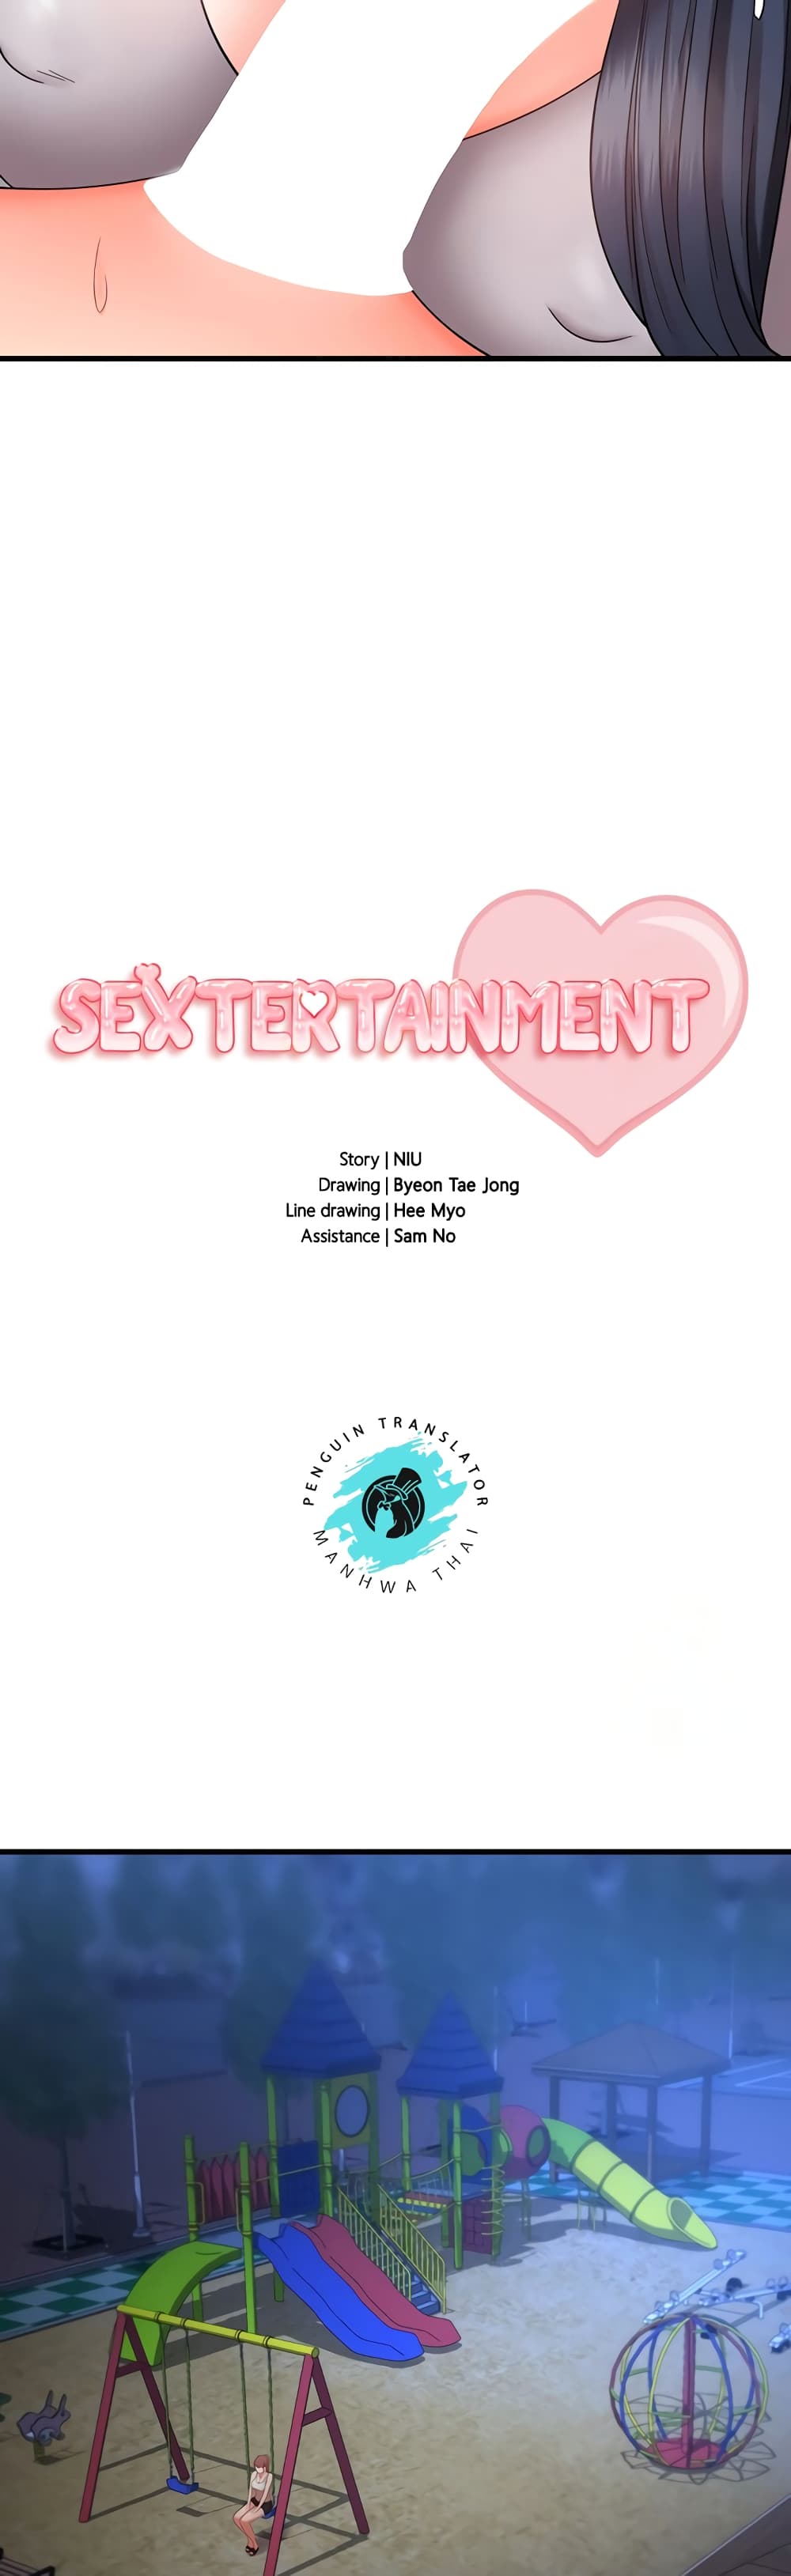 Sextertainment 9 (21)